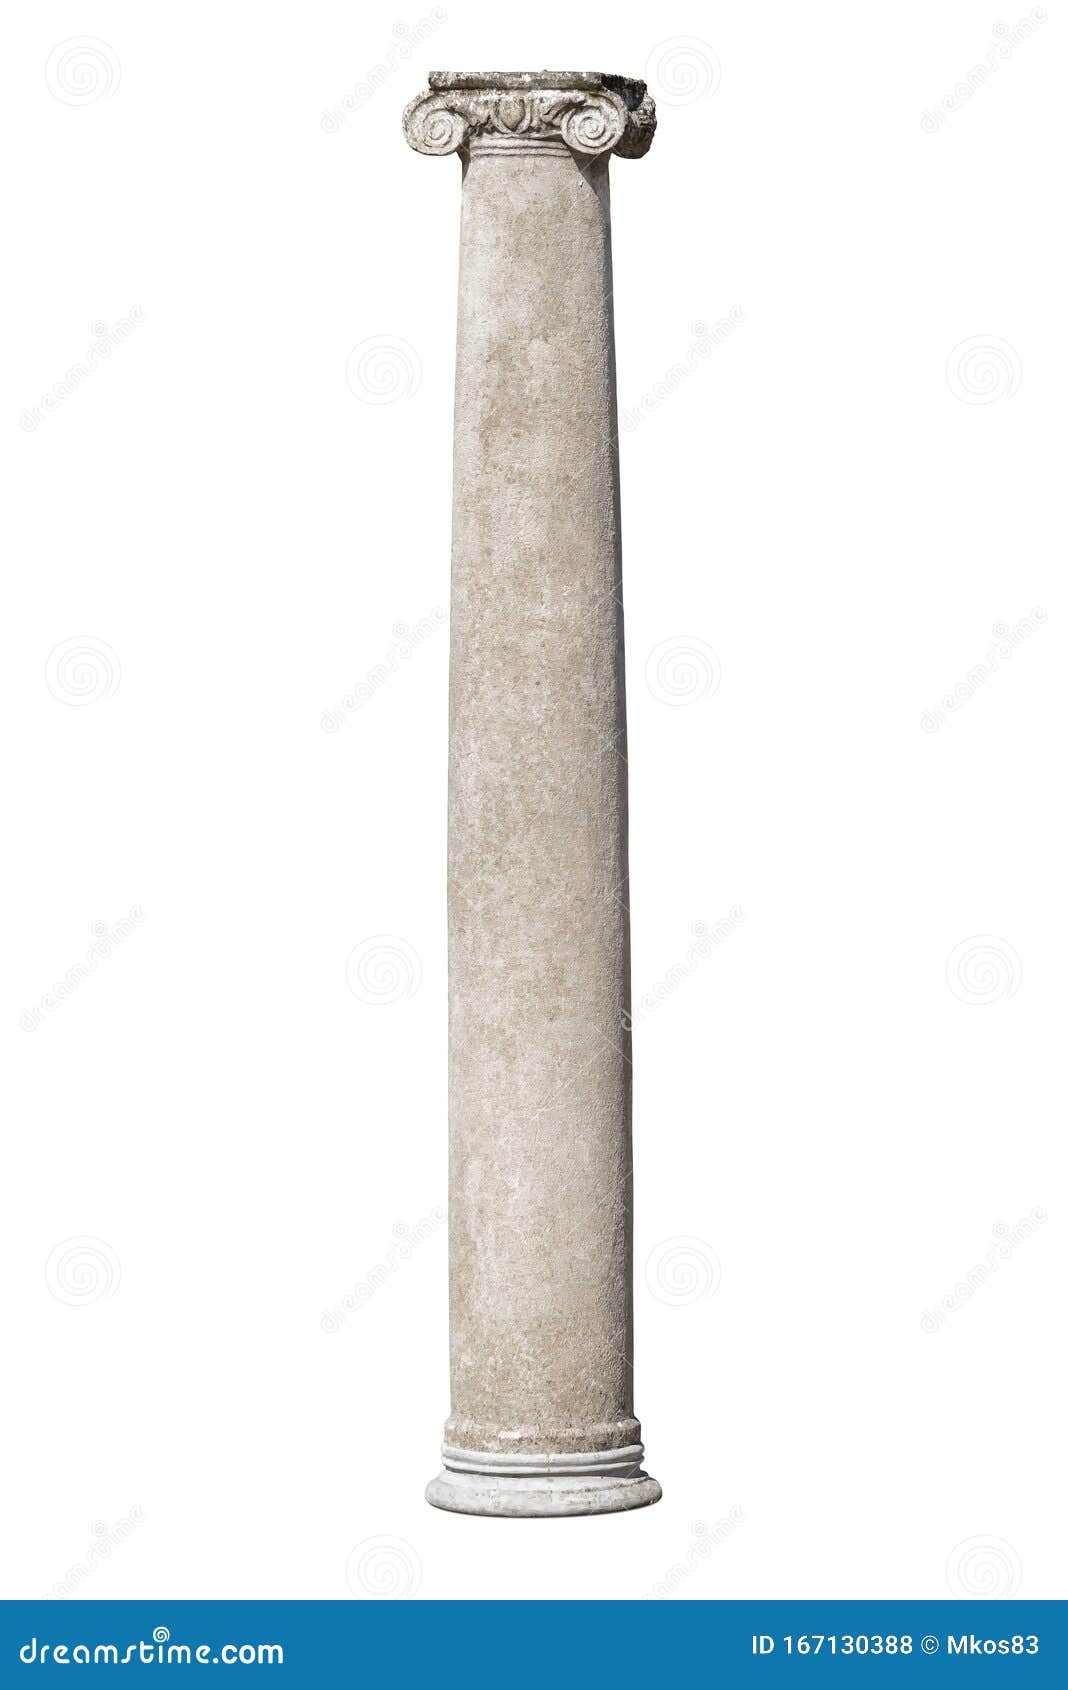 ancient roman column  on white background